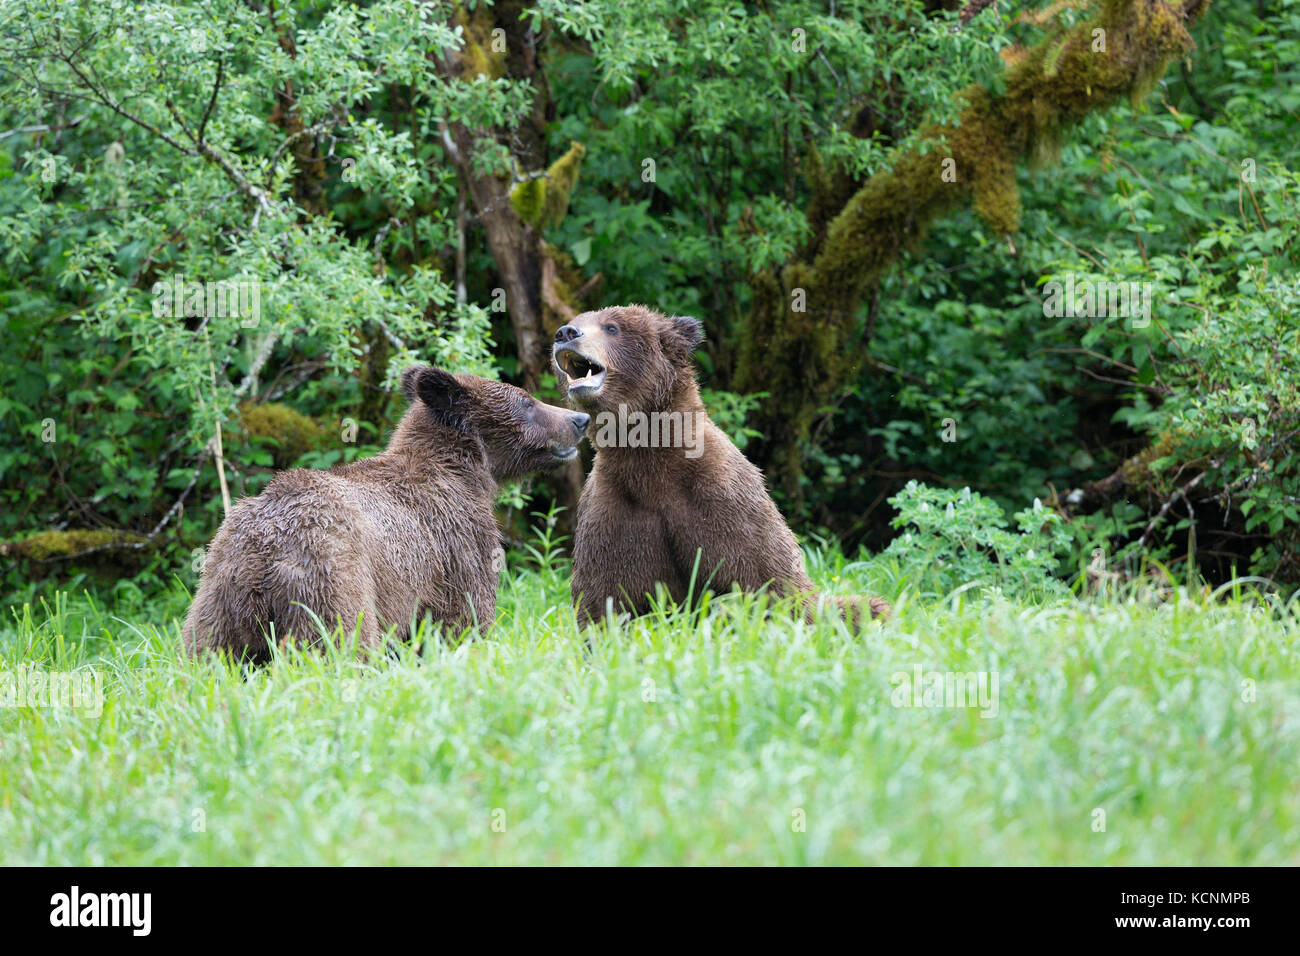 Orso grizzly (Ursus arctos horribilis), giovane maschio (a destra) e femmina il corteggiamento, khutzeymateen ingresso, khutzeymateen orso grizzly santuario, British Columbia, Canada Foto Stock